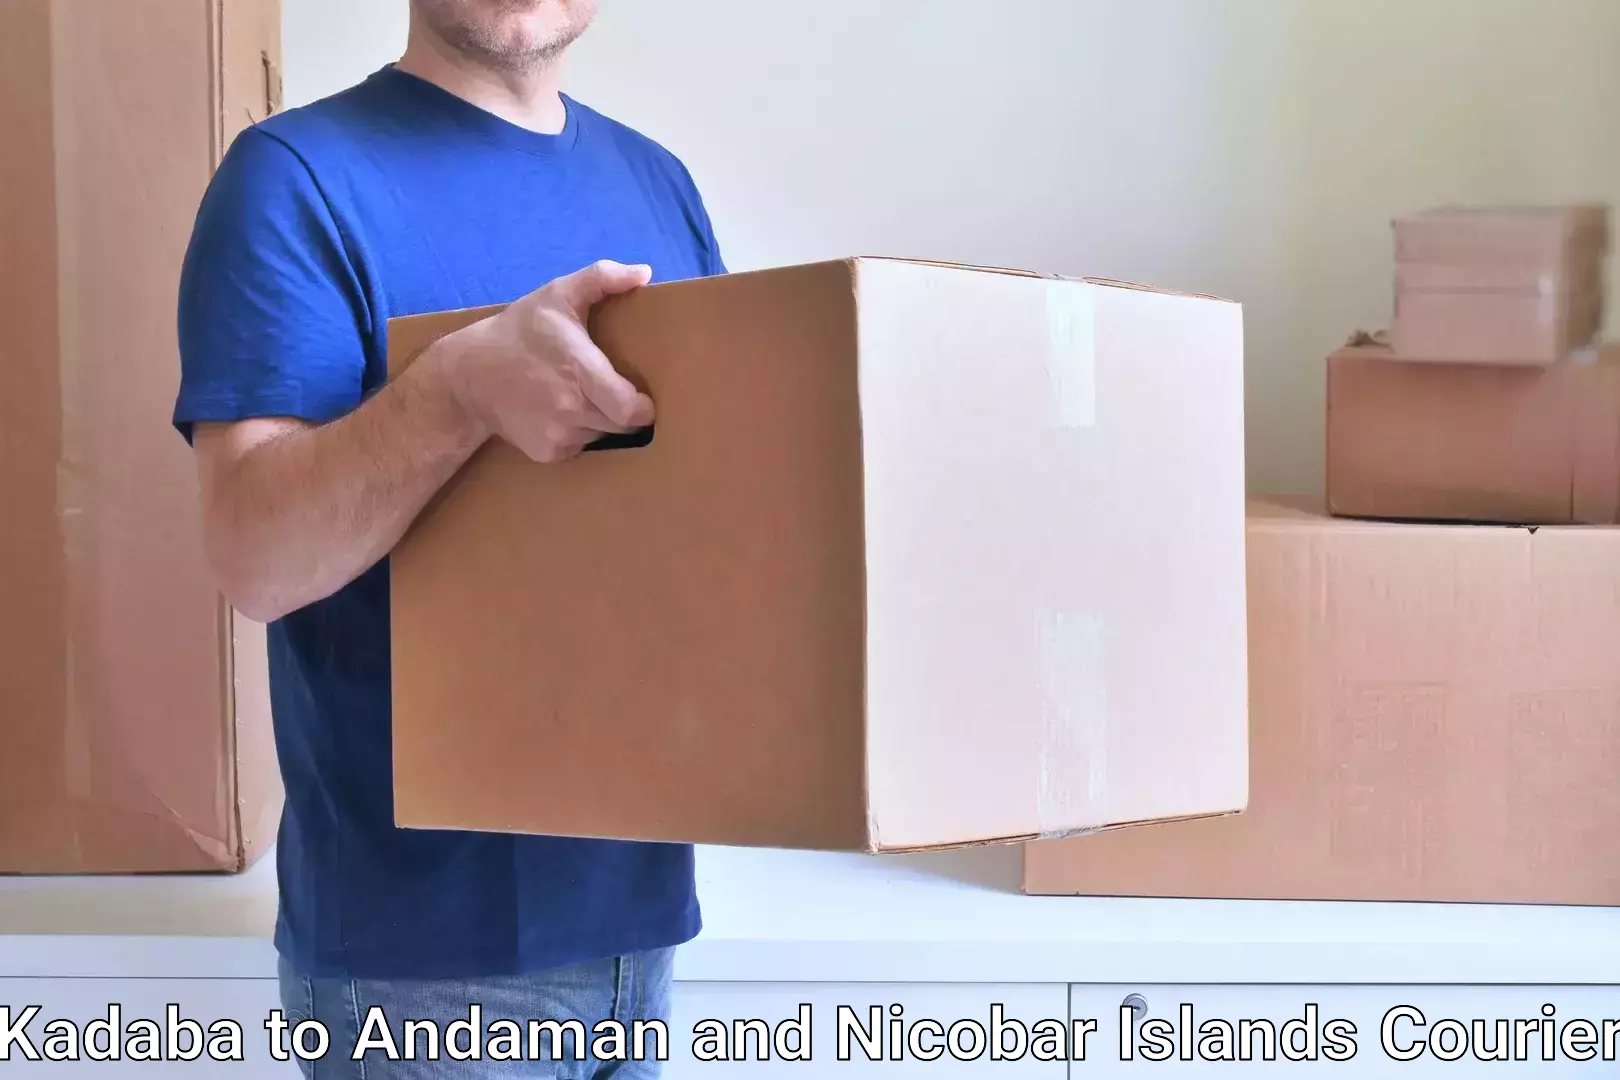 Courier service efficiency Kadaba to Andaman and Nicobar Islands